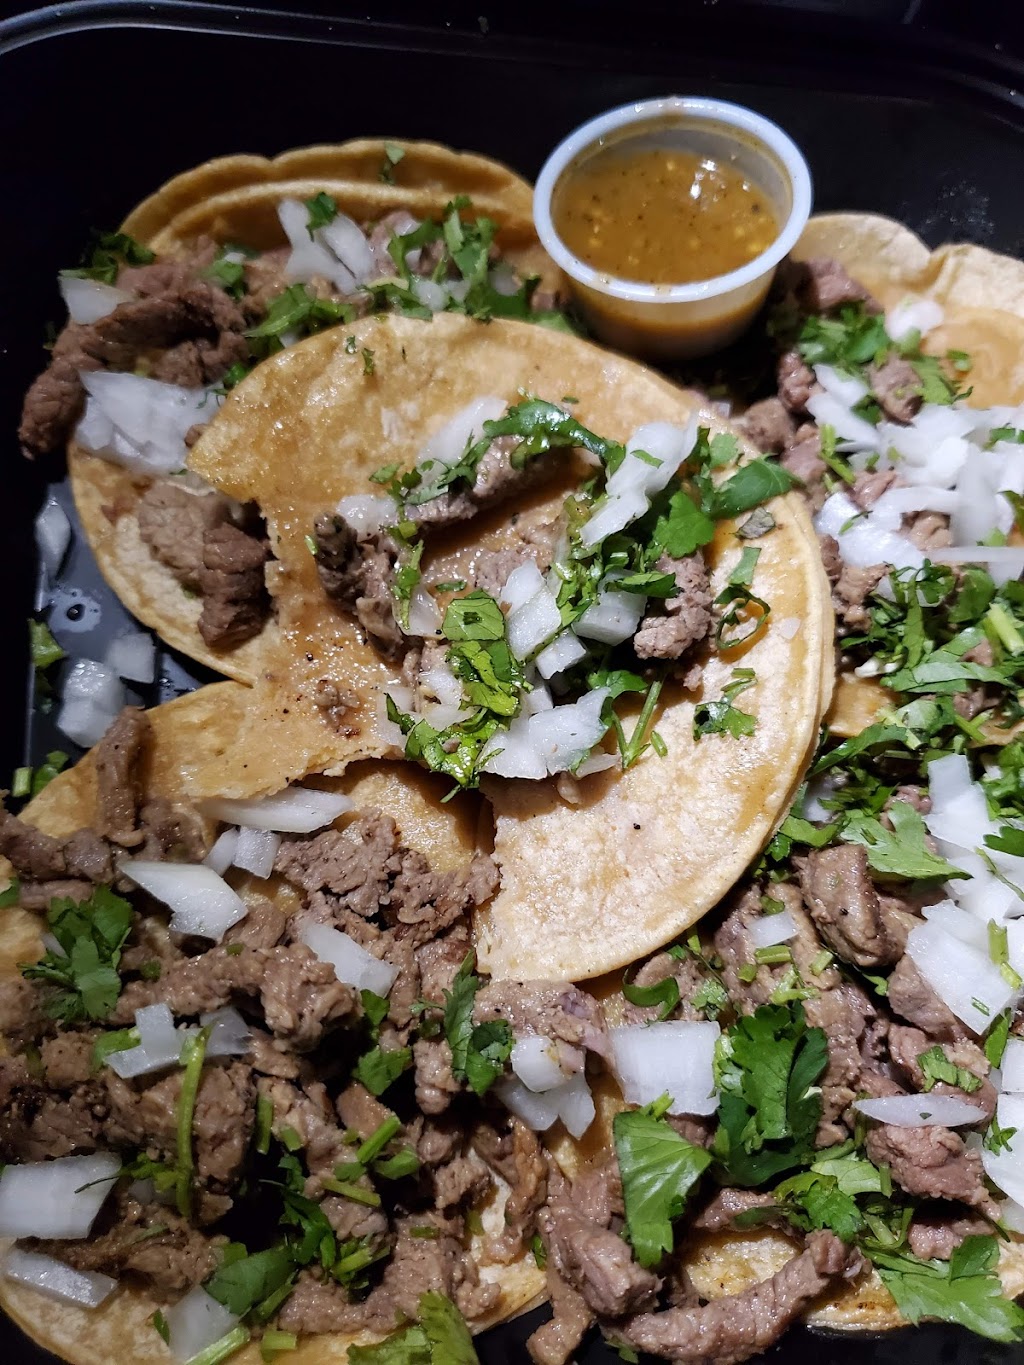 Castañedas Mexican Food | 1040 N State St, San Jacinto, CA 92582, USA | Phone: (951) 654-4700